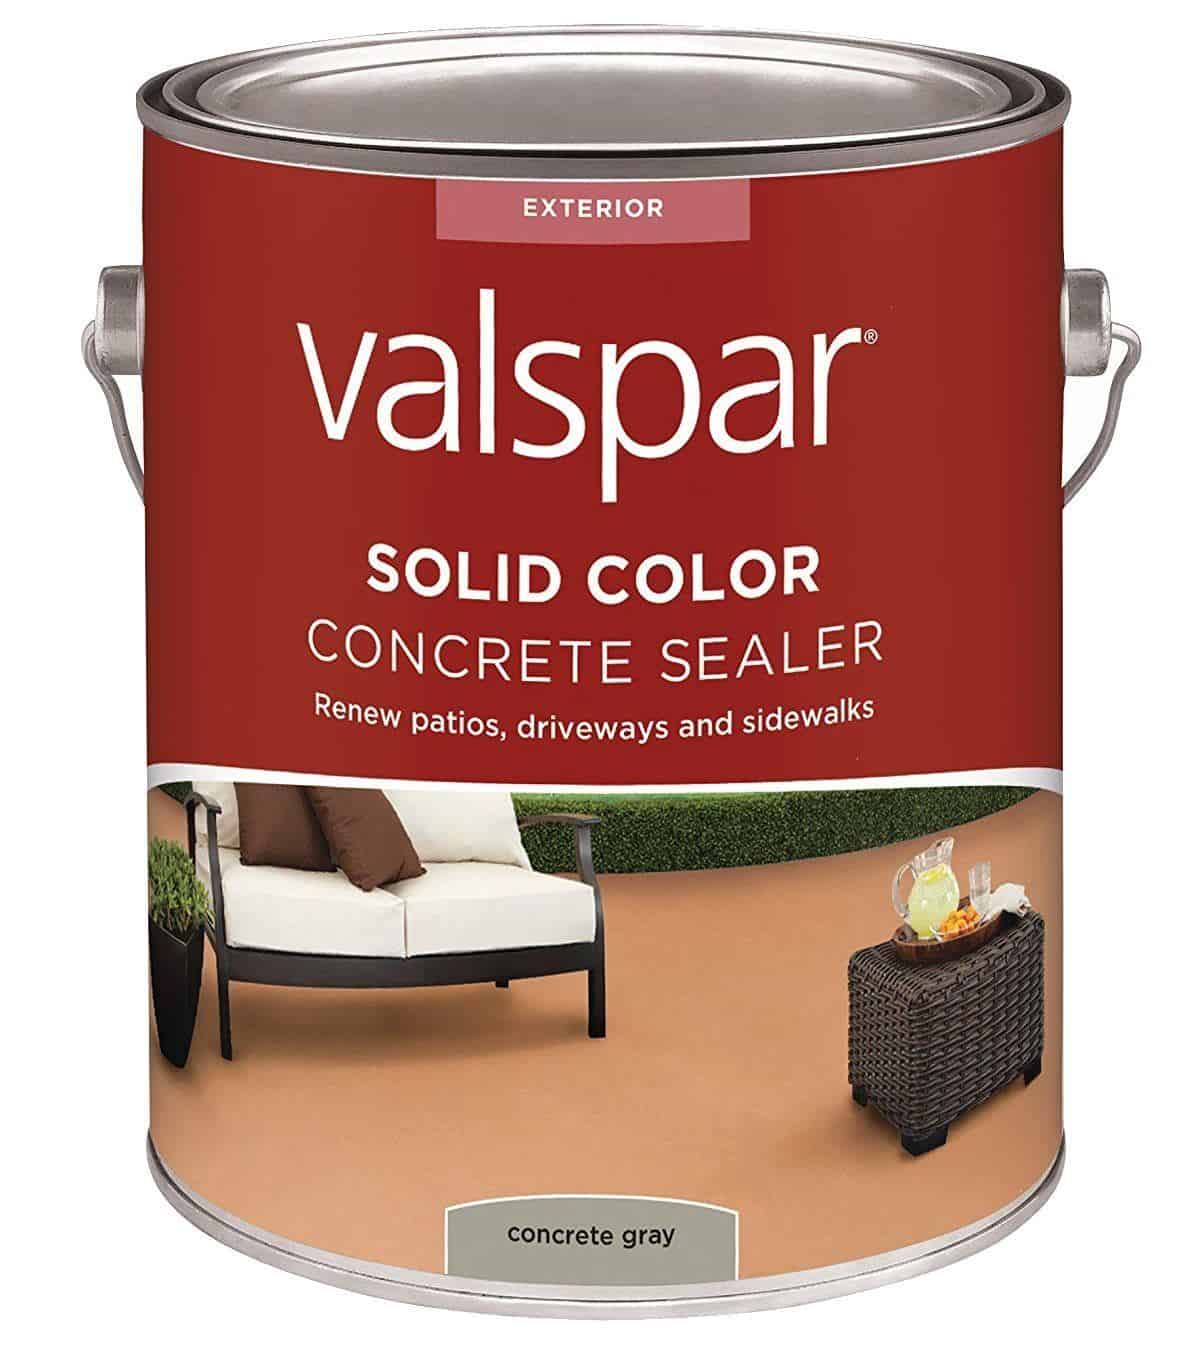 Valspar Concrete Sealer Review Seal With Ease